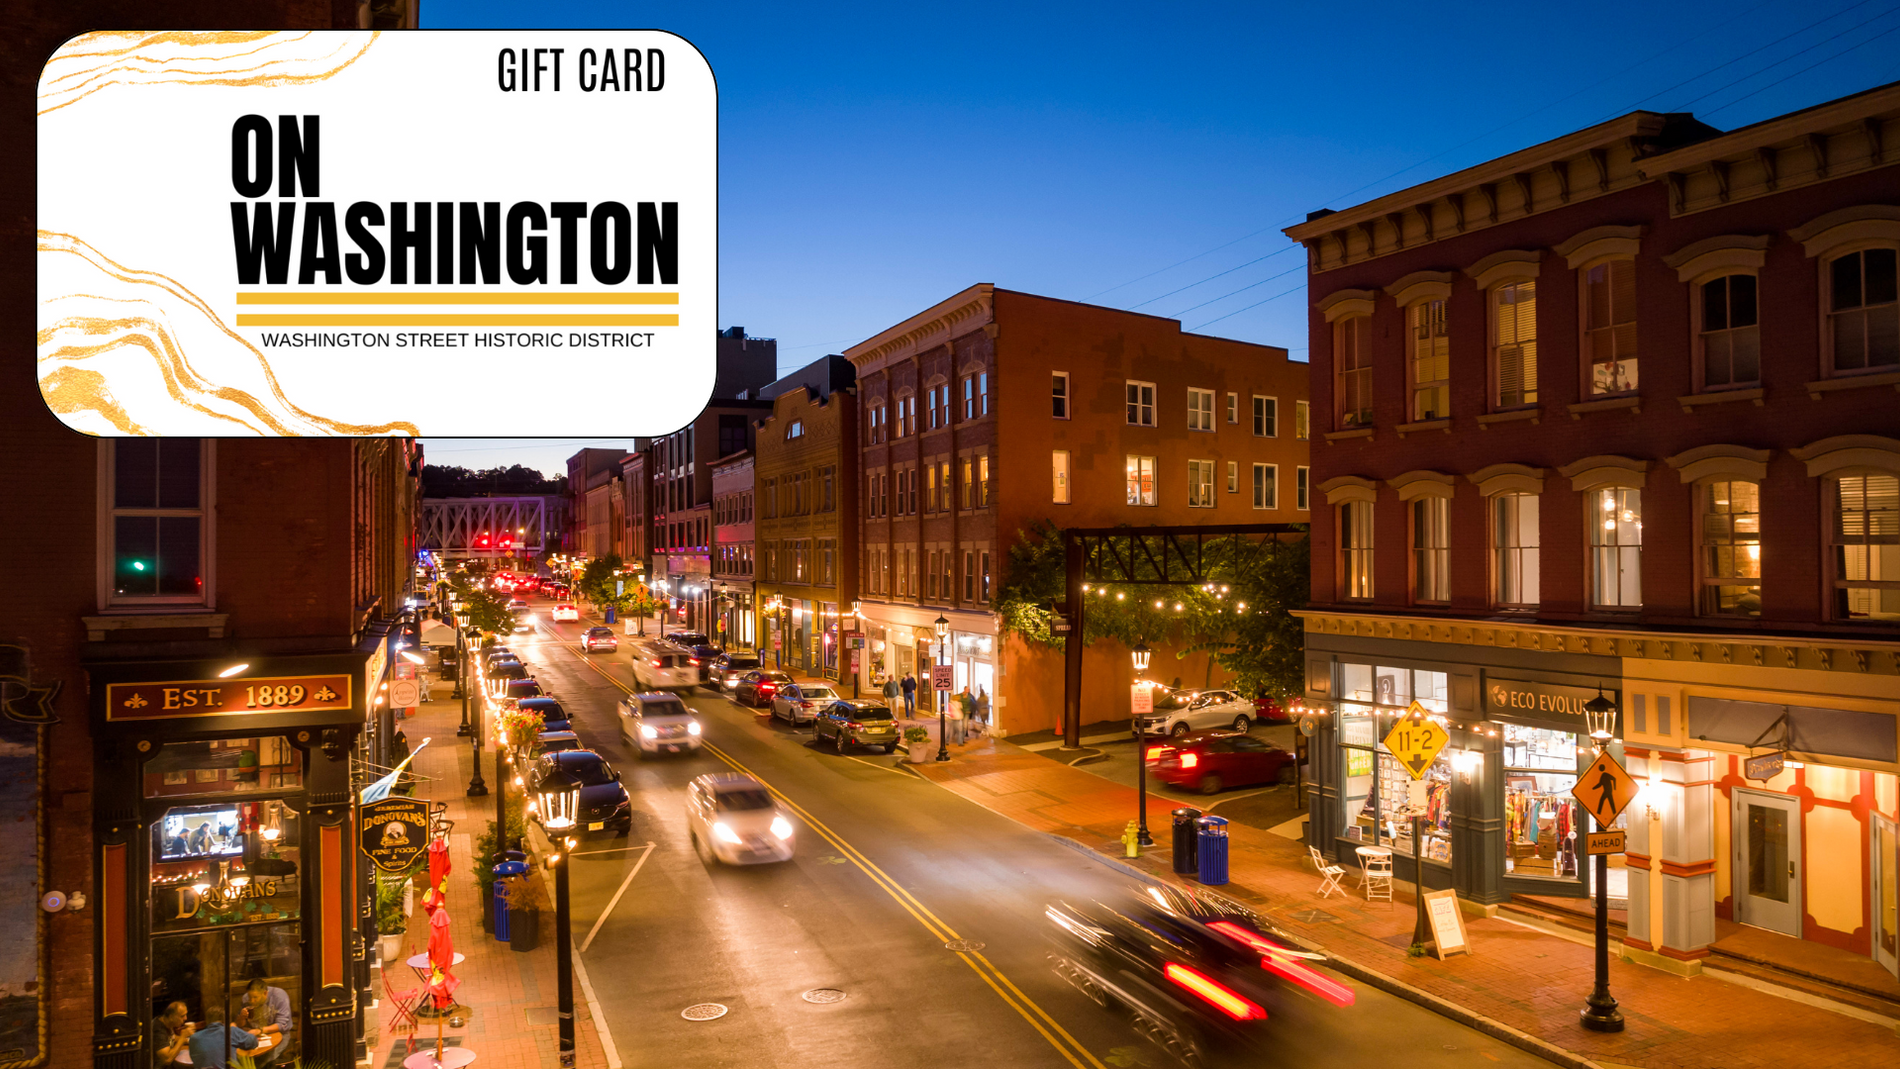 Agw Sono Partners Launches The OnWashington Gift Card